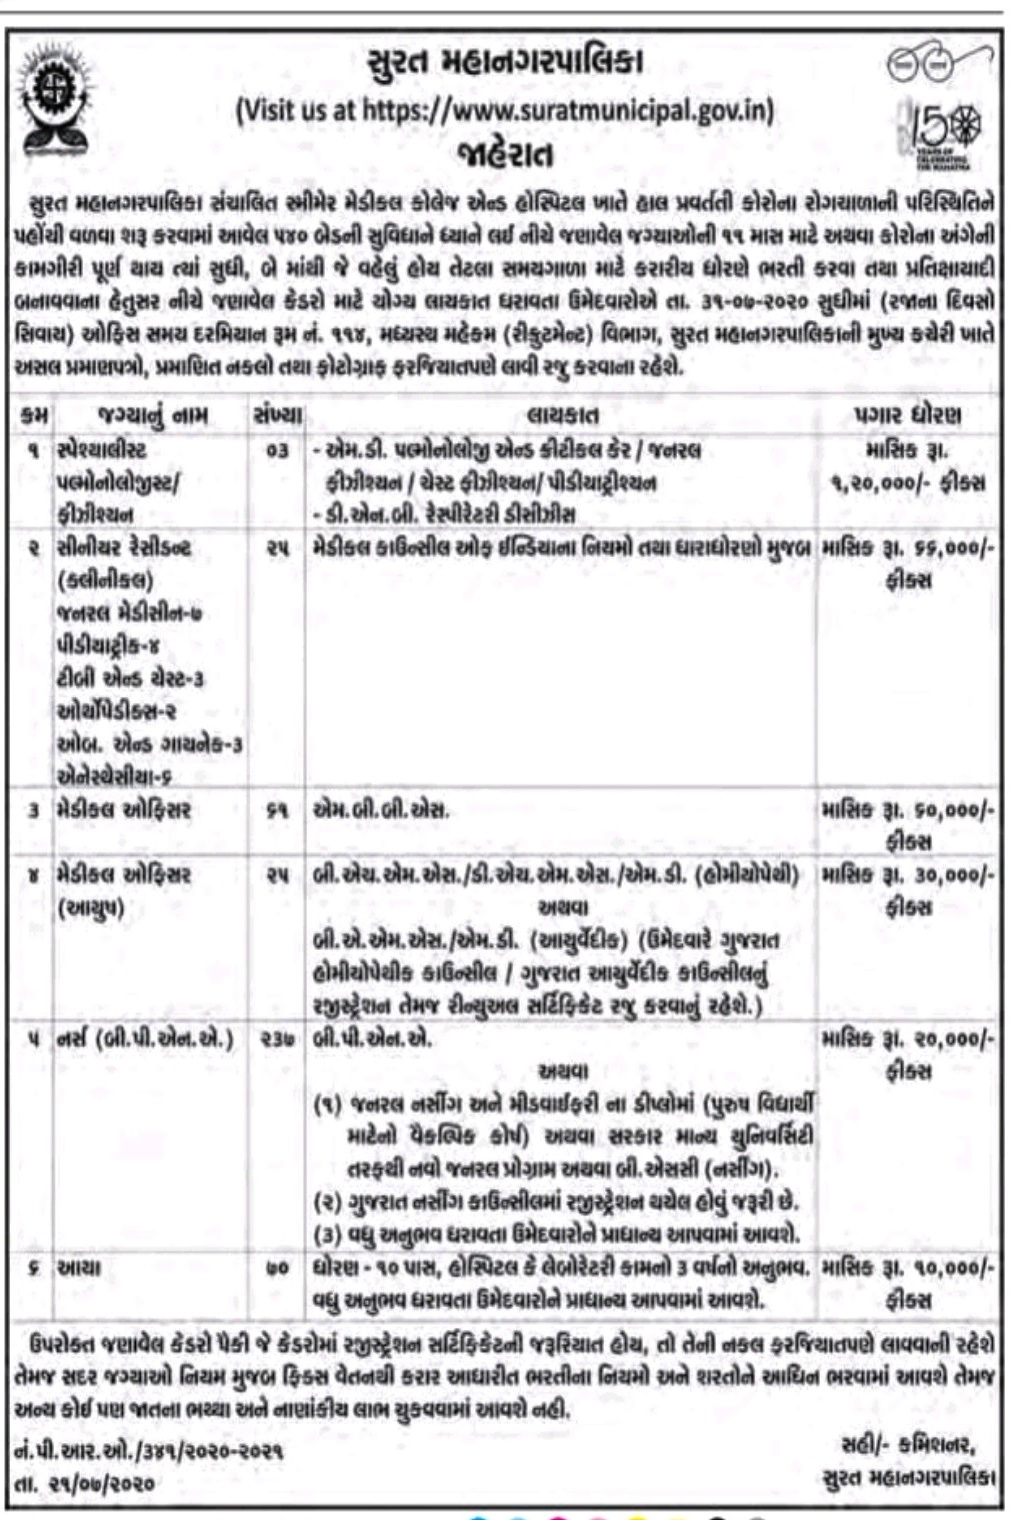 Surat Municipal Corporation (SMC) Recruitment 2020